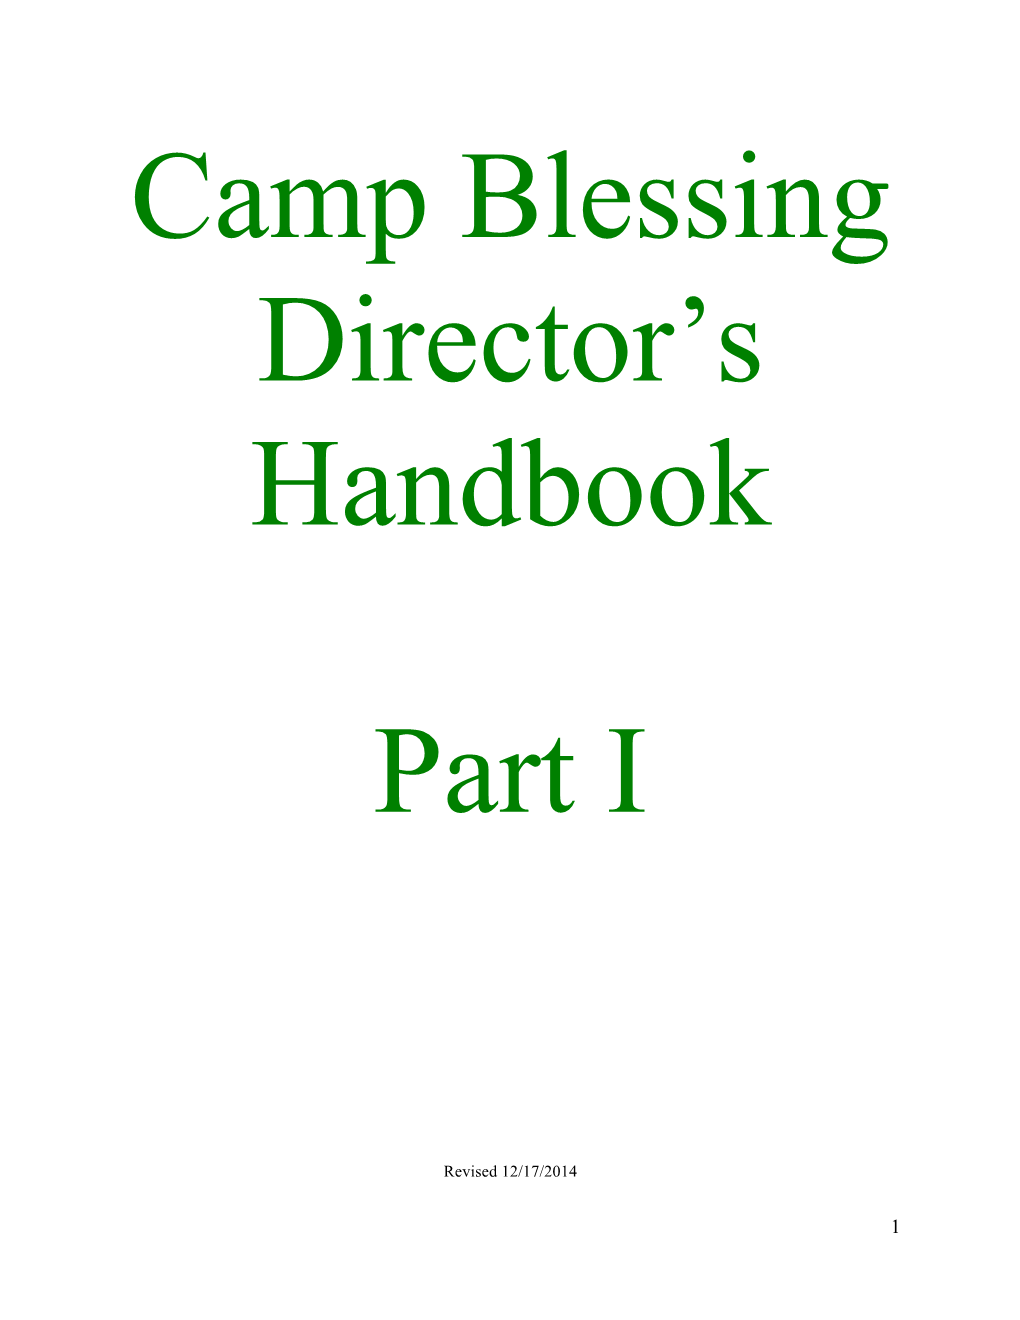 Camp Blessing Director's Handbook Part I